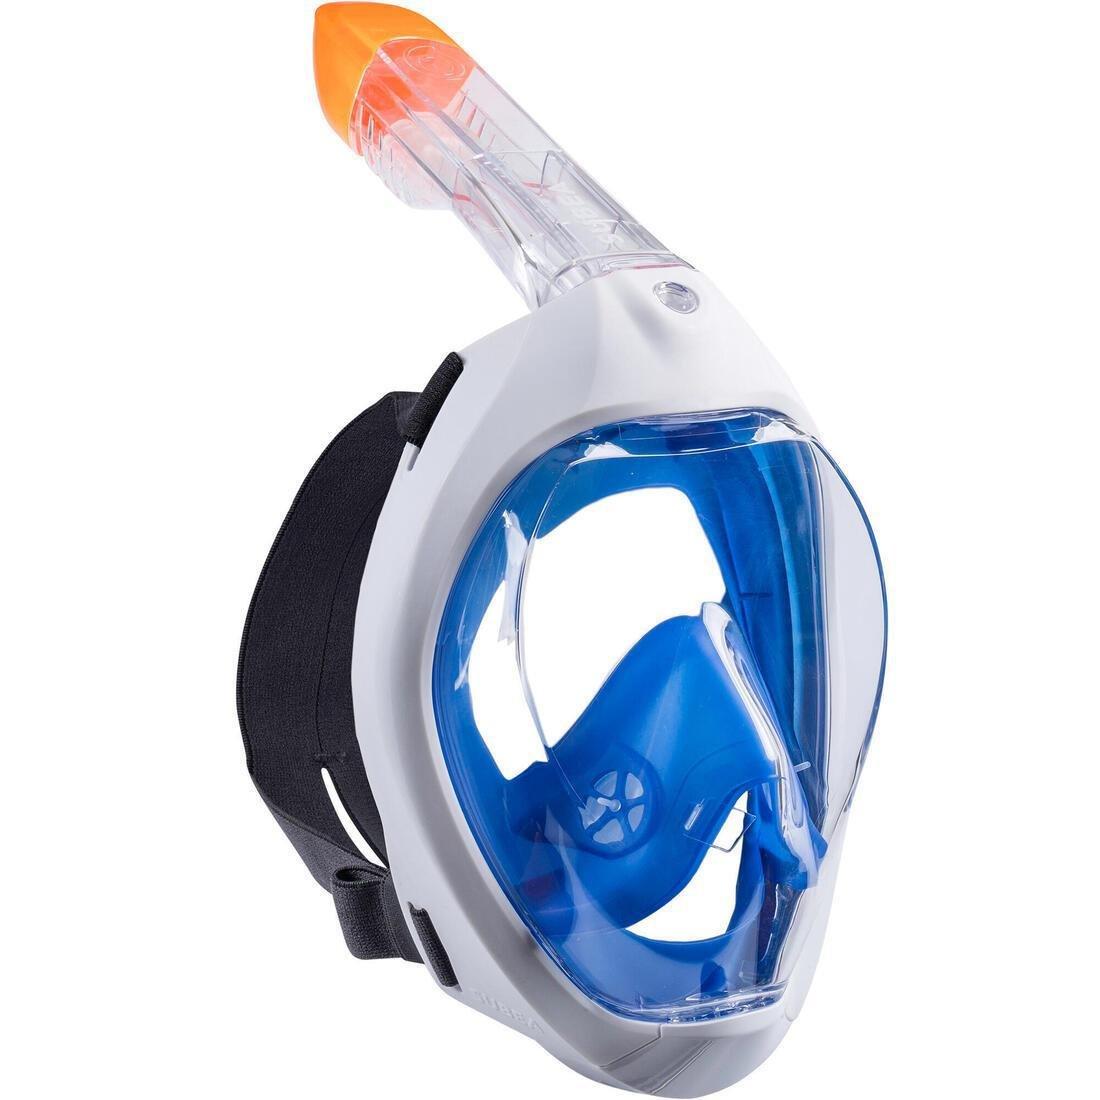 SUBEA - Snorkelling Kit Easybreath 500 Mask Fins, Blue